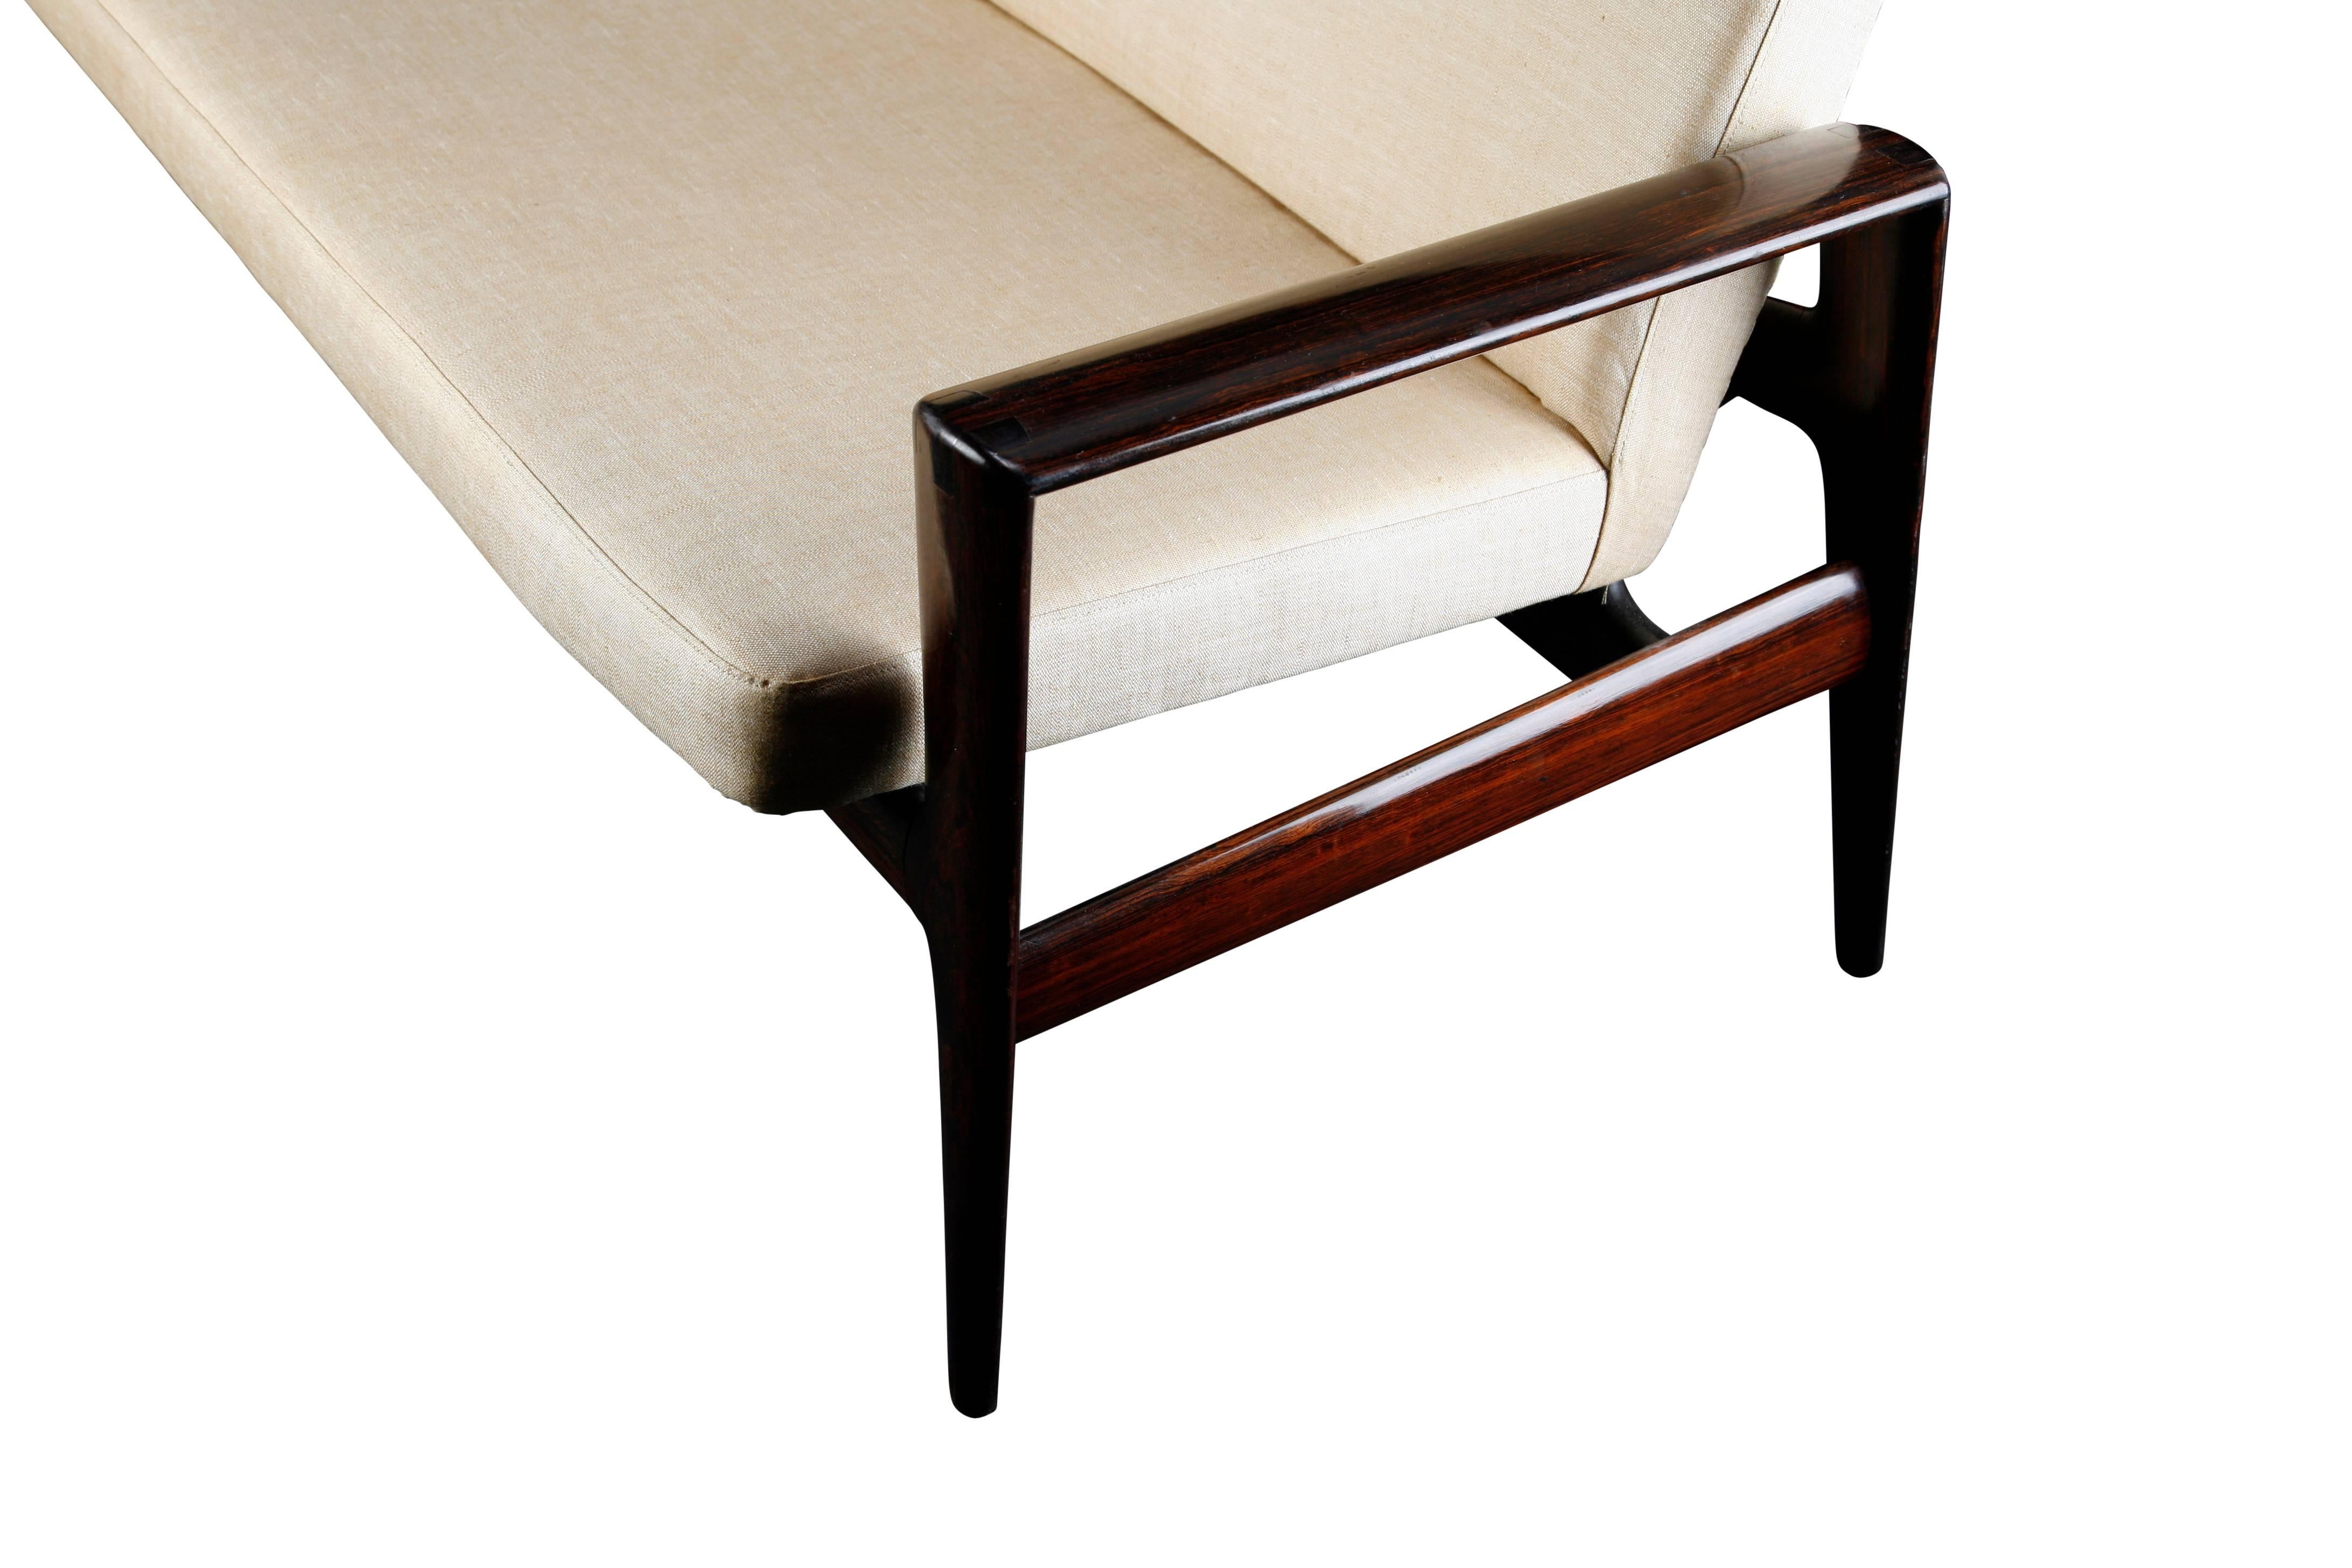 Mid-Century Modern Italian Sofa Rosewood Attributed to Ico & Luisa Parisi, 1950s